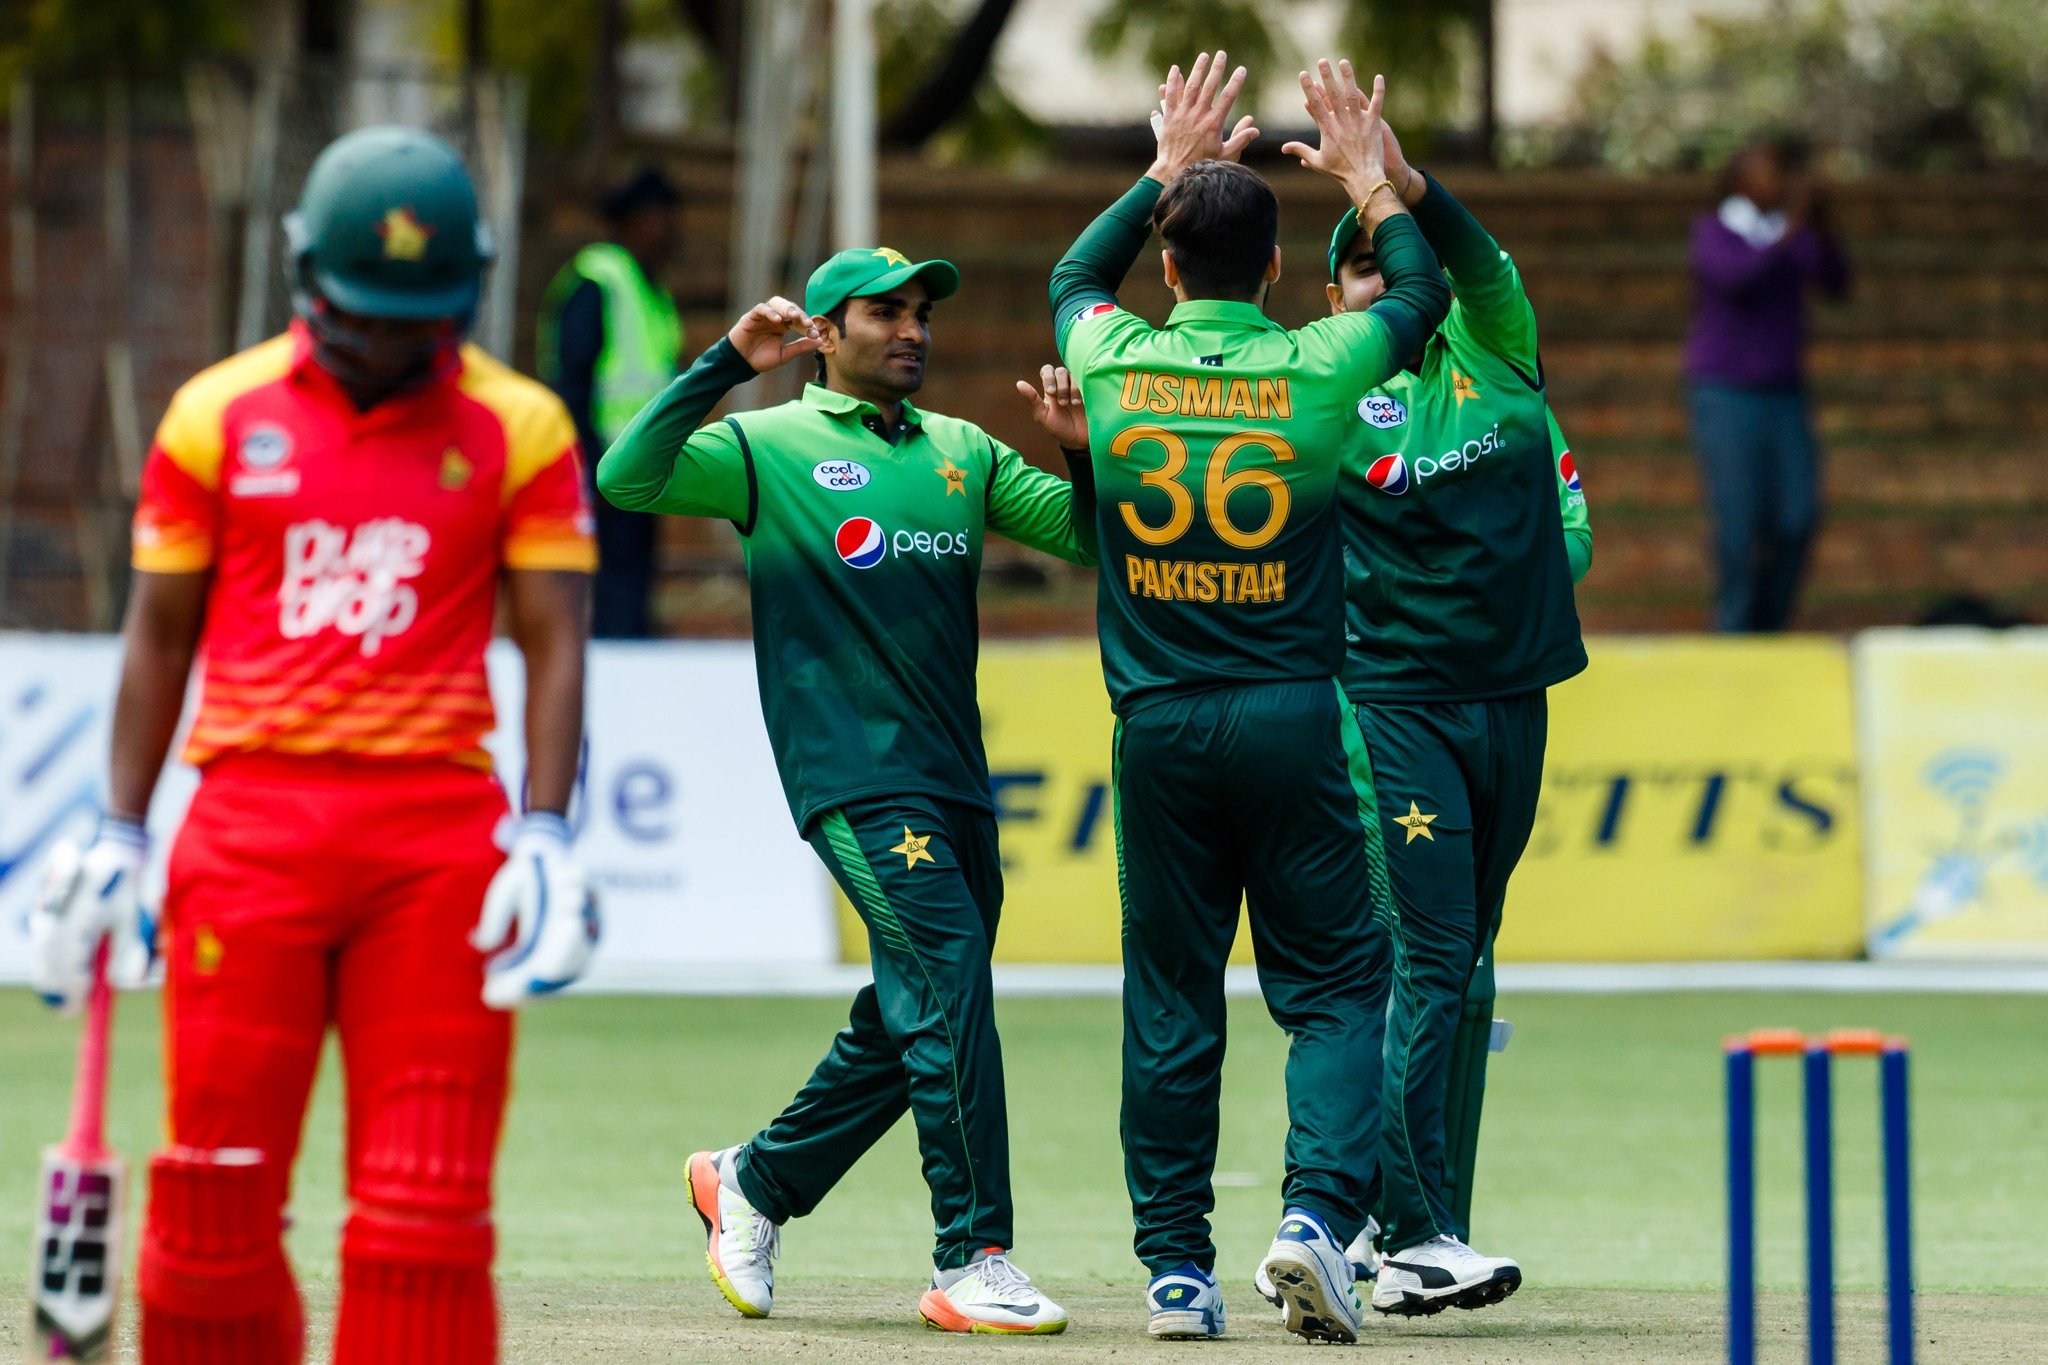 Zaman hits unbeaten double-century as Pakistan crush Zimbabwe again